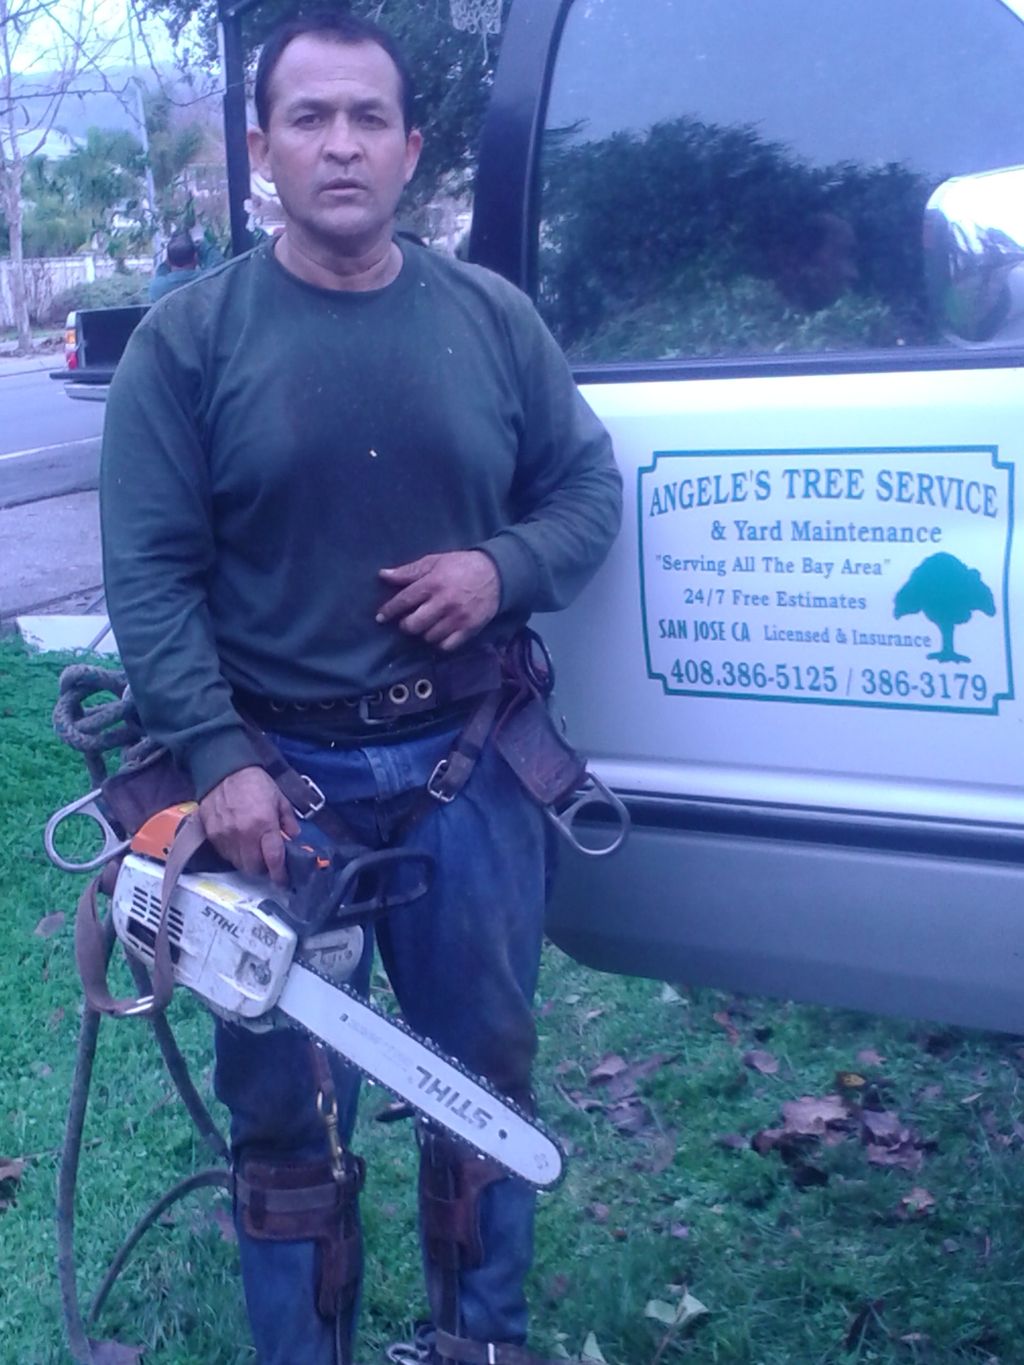 Angele's Tree Service